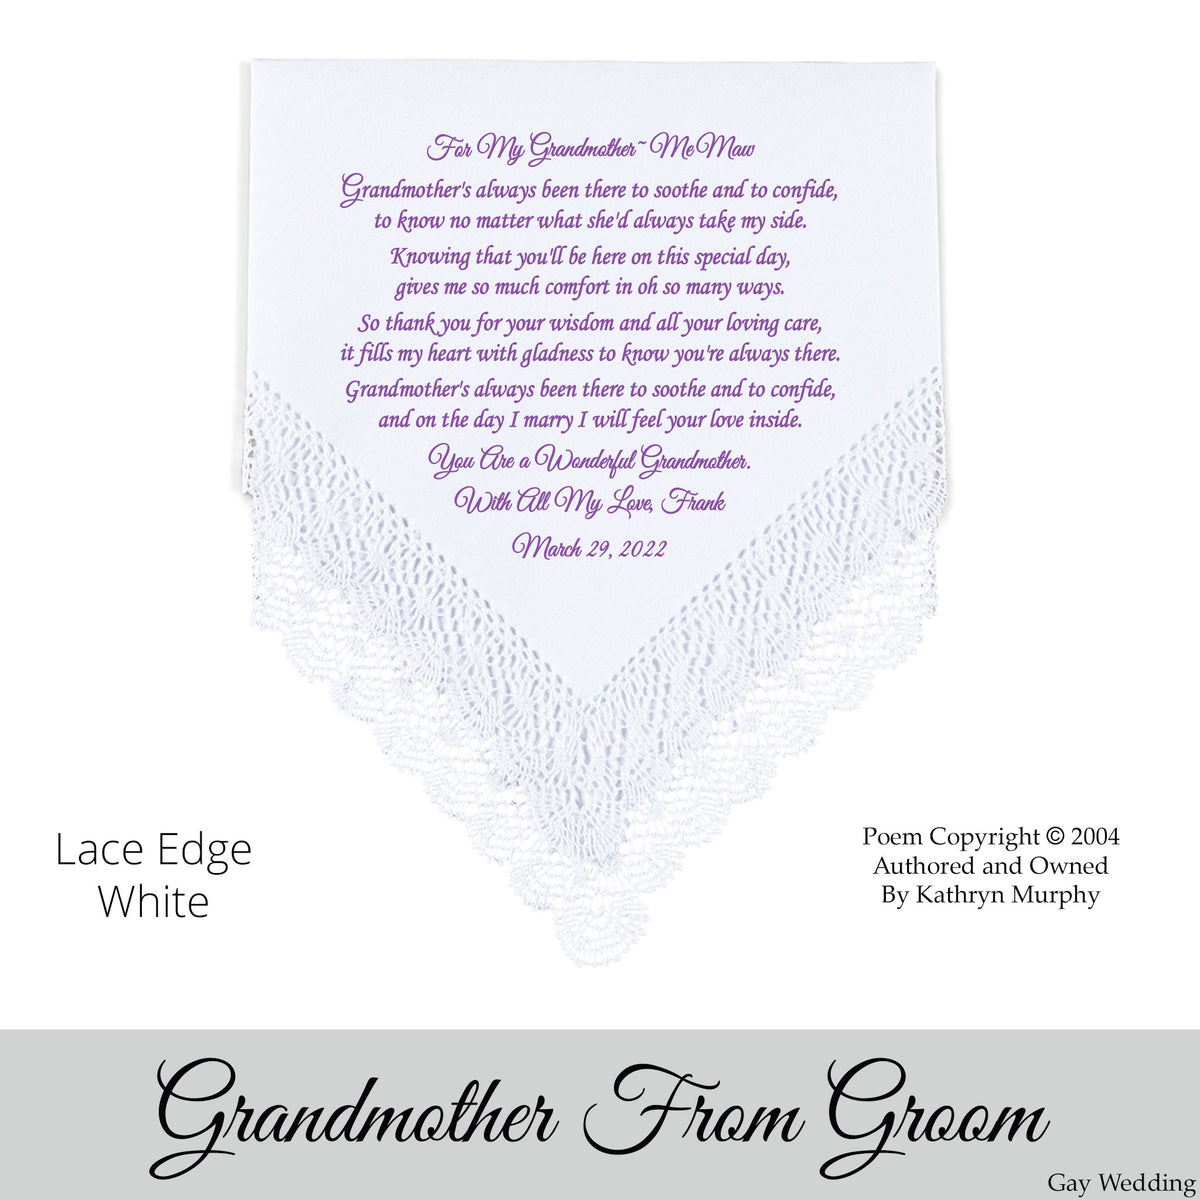 Gay Wedding Gift for the Grandmother of the Groom poem printed wedding hankie